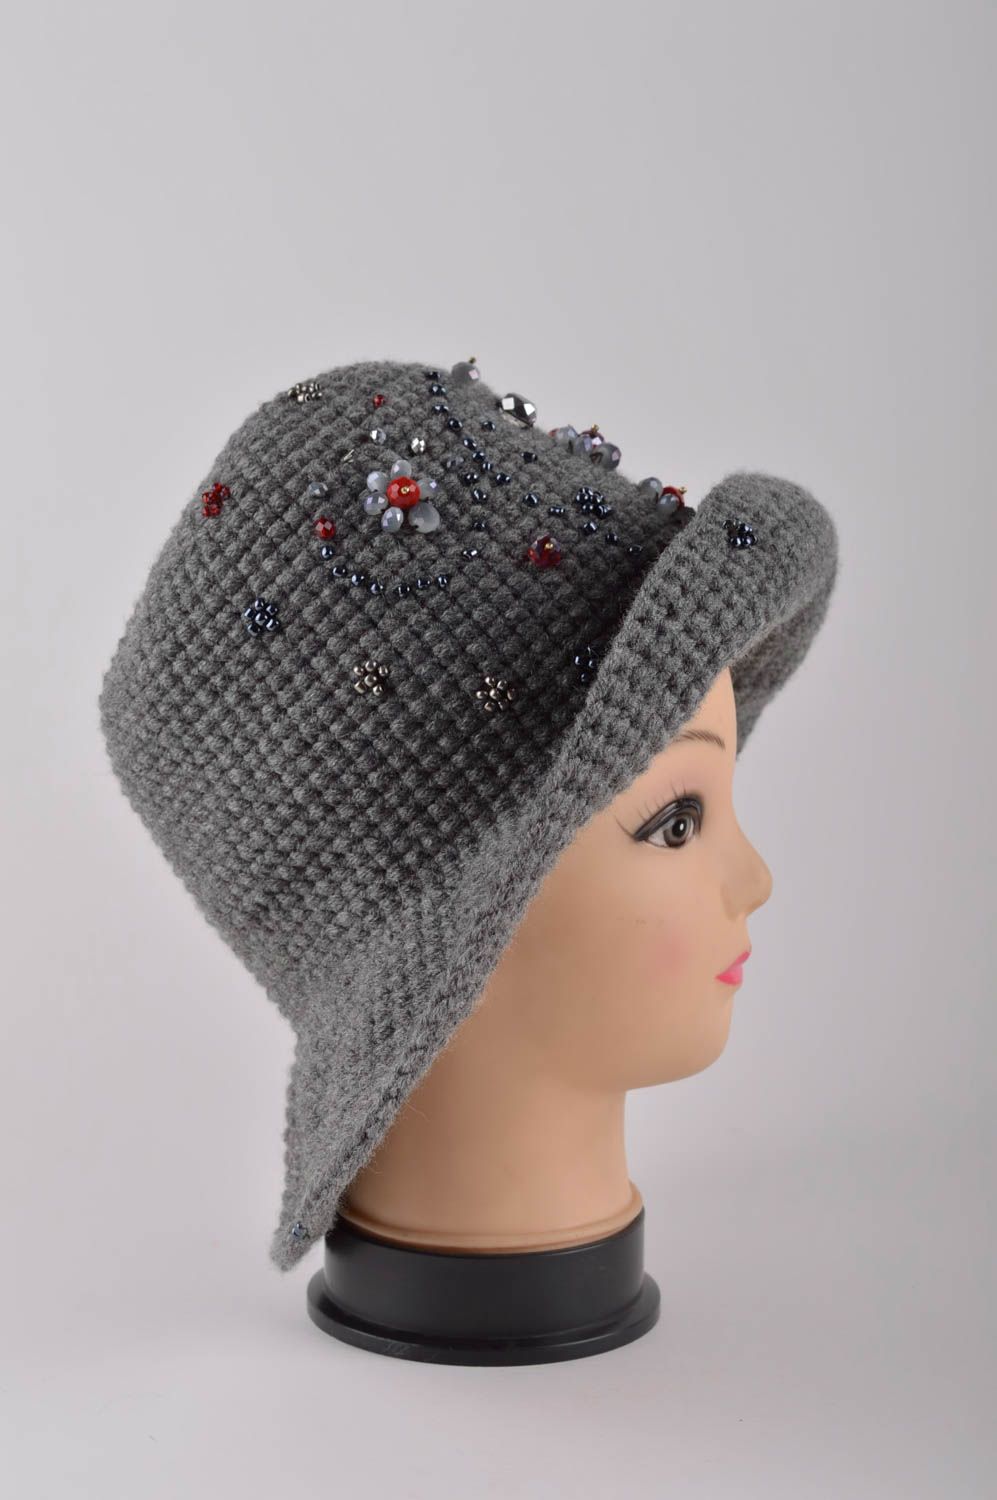 Handmade accessories for women winter hat ladies hat crochet hat gifts for women photo 4